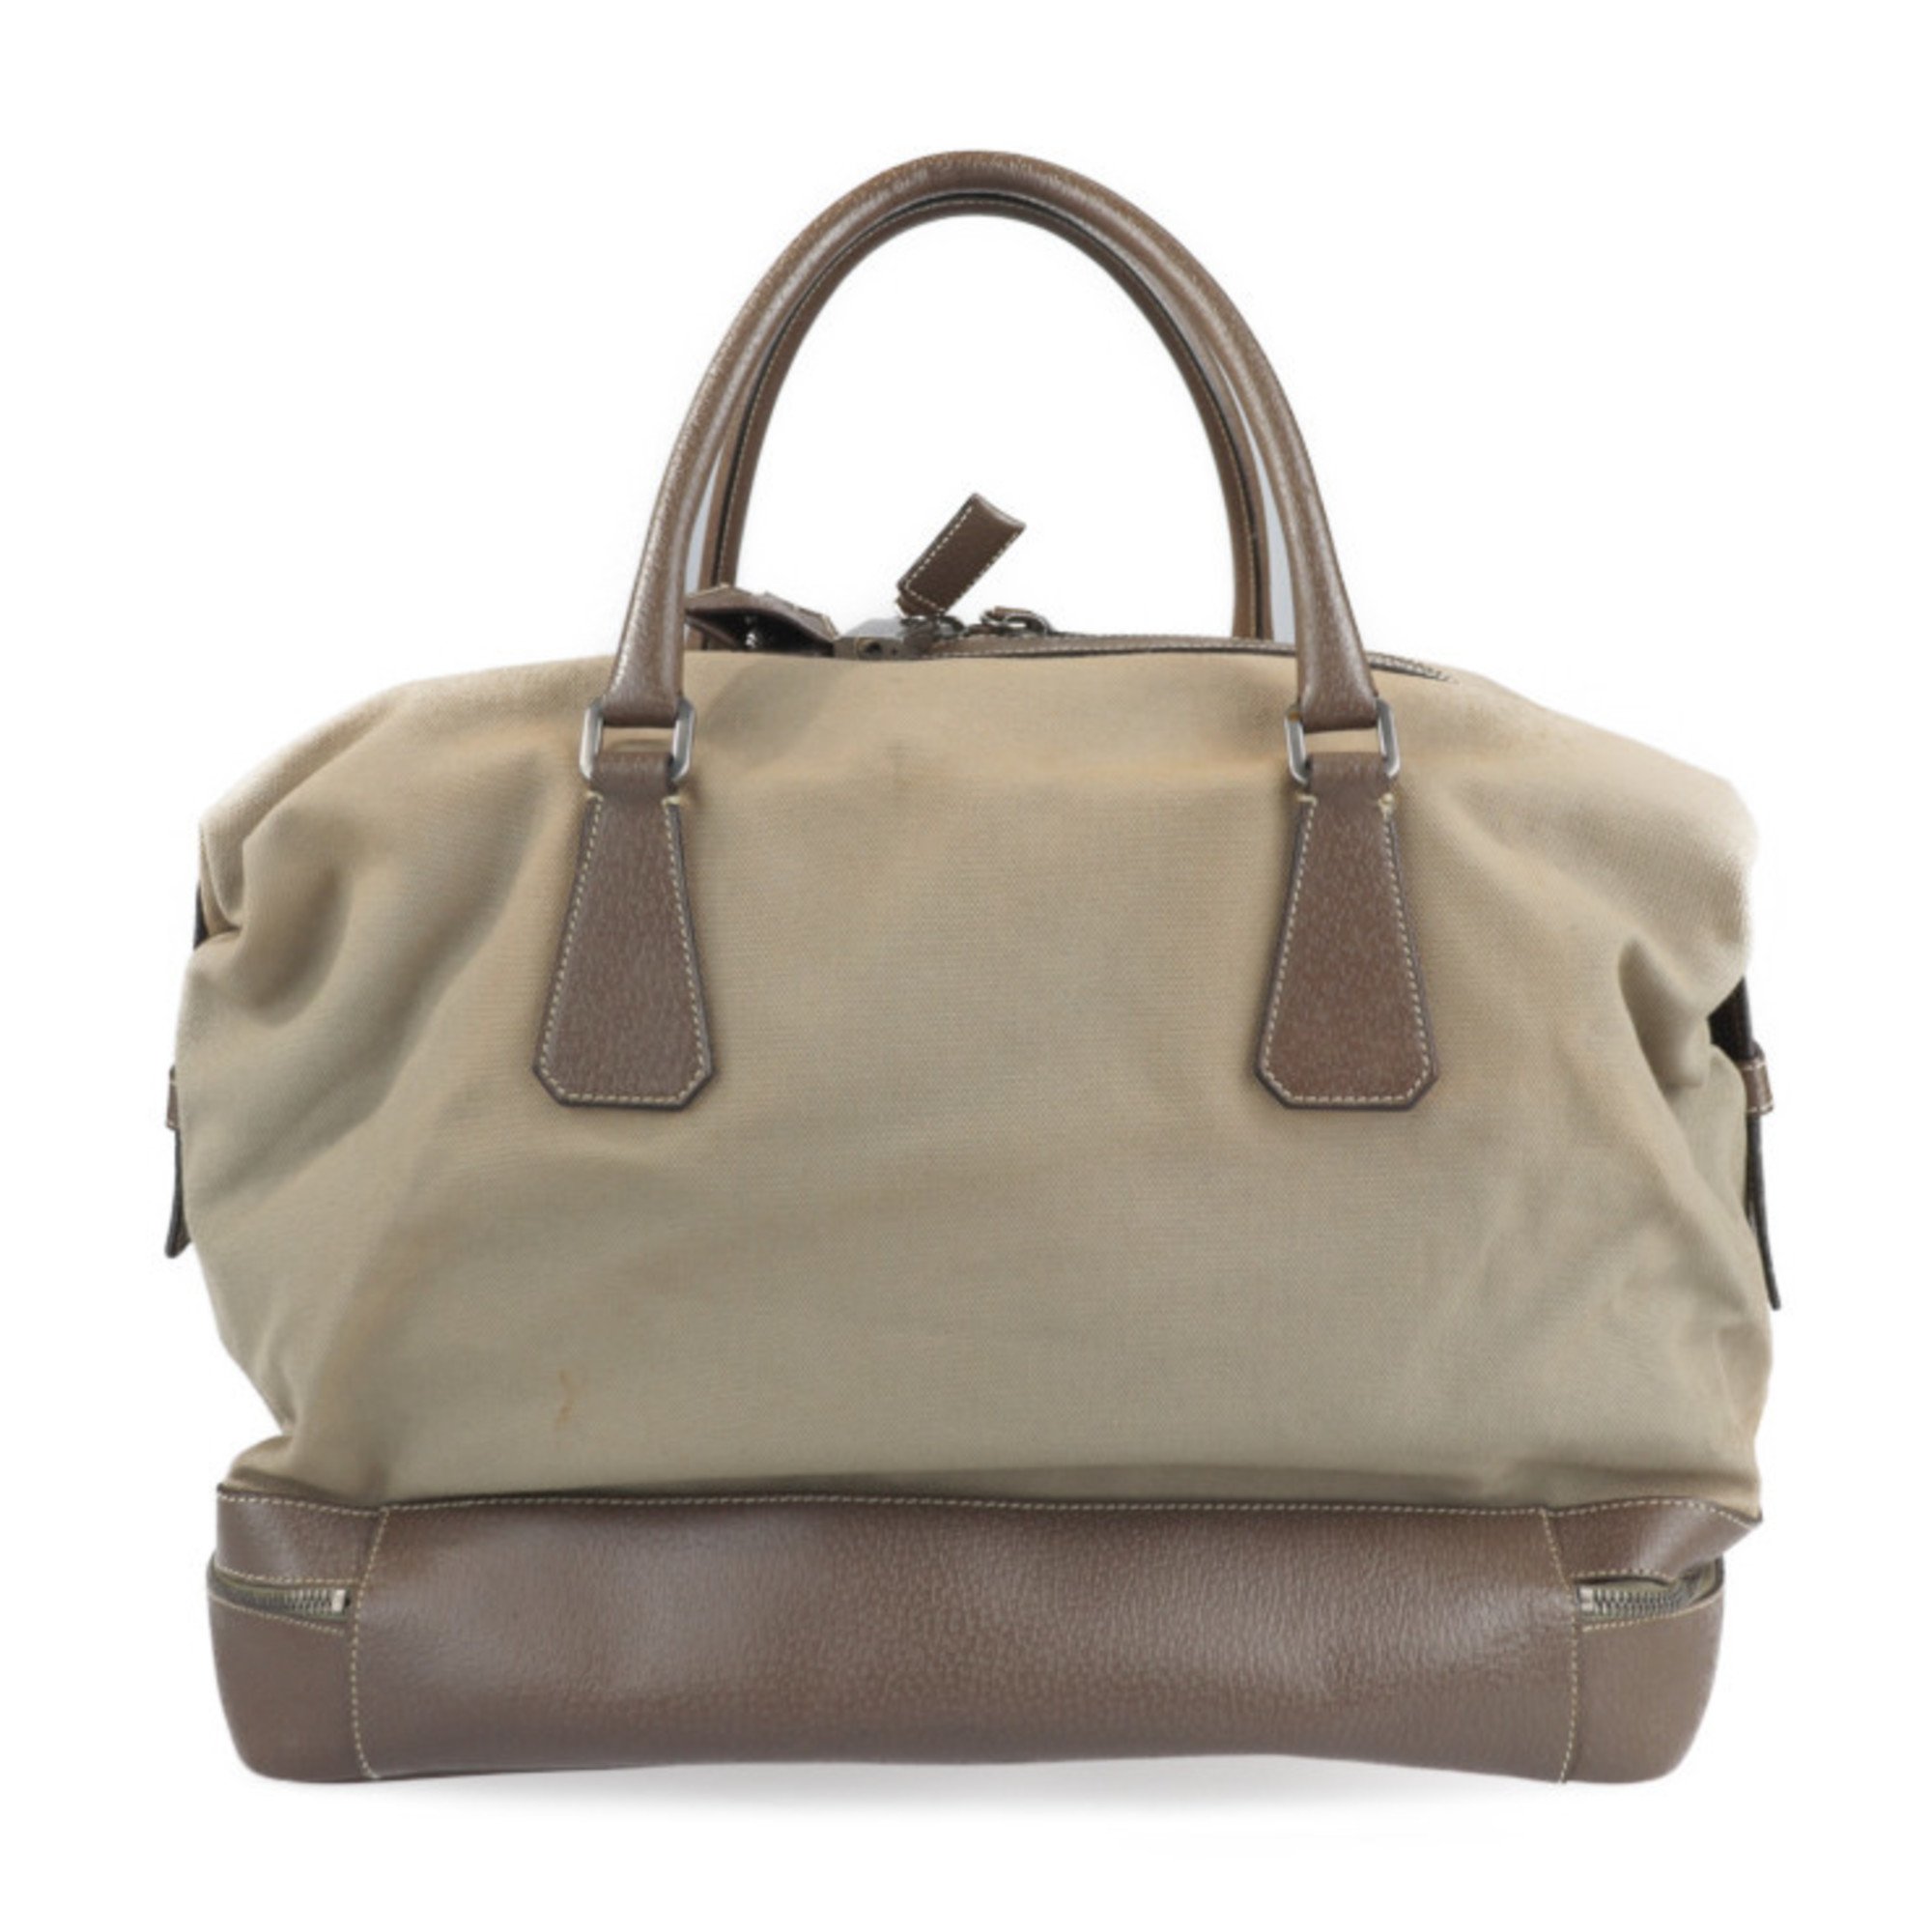 PRADA Prada handbag VS0065 canvas buffalo leather khaki brown Boston bag